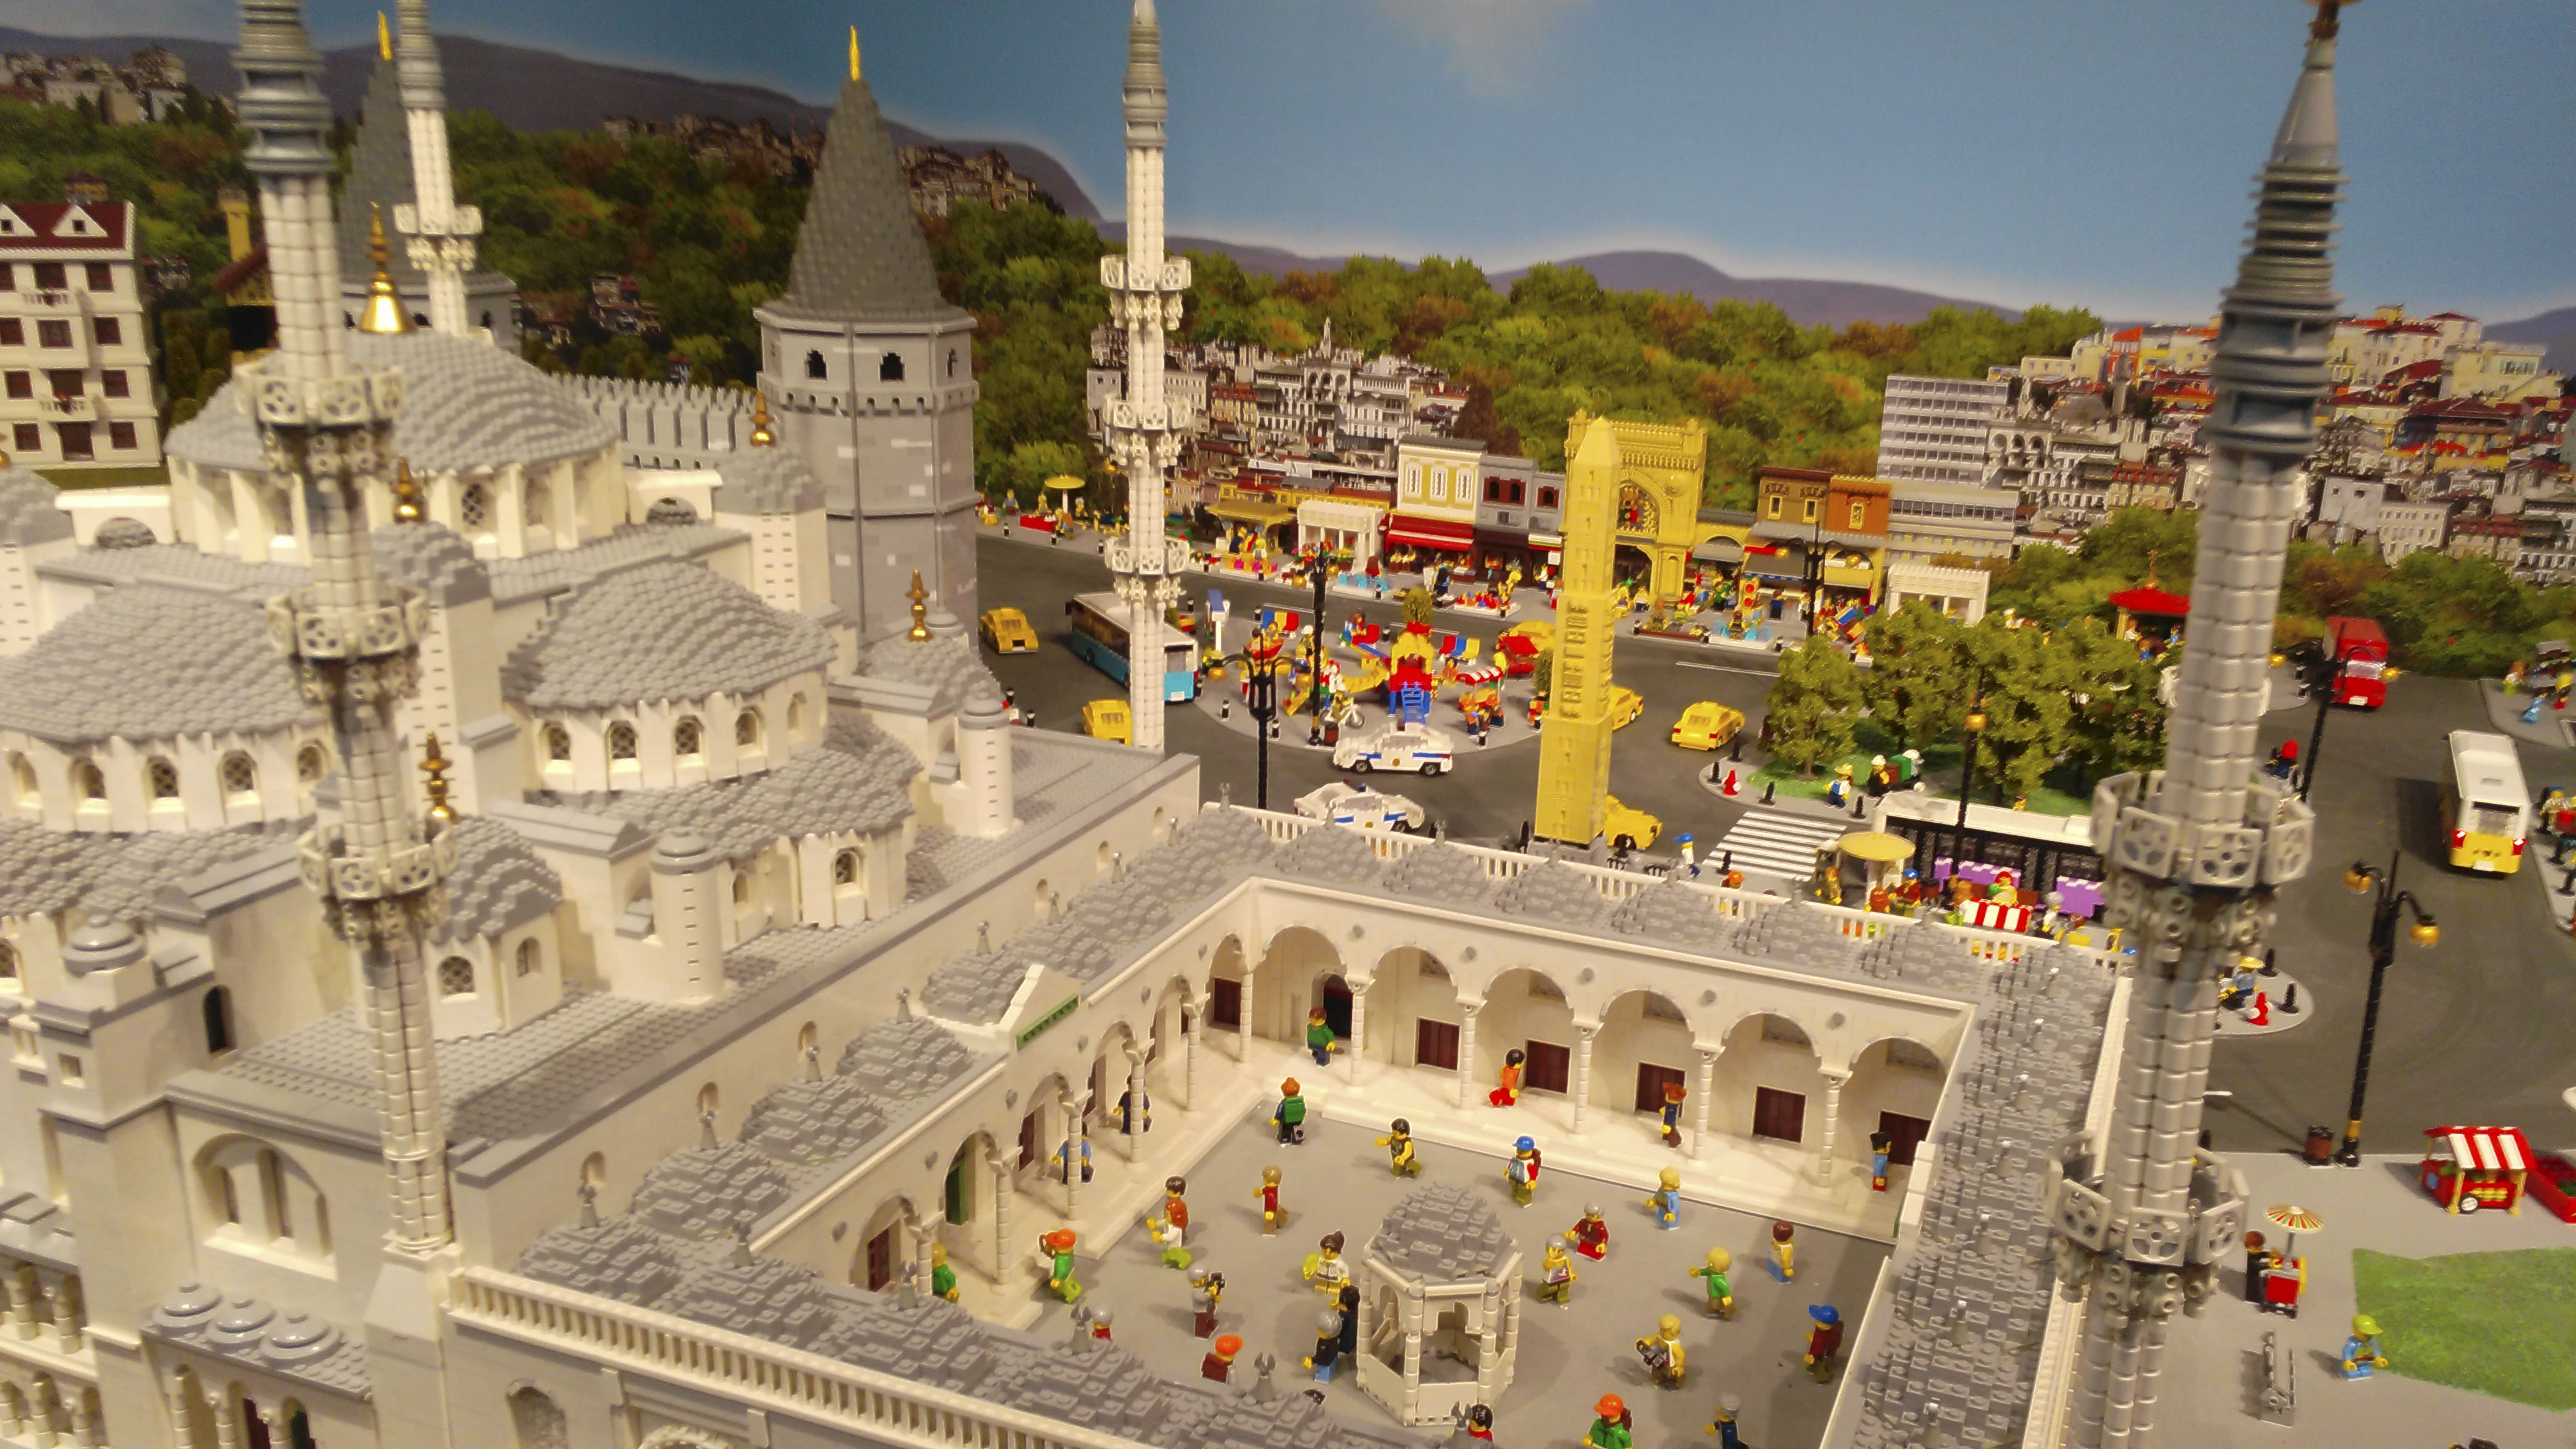 visdom hellig kanal Istanbul's landmarks recreated in Lego bricks | Daily Sabah